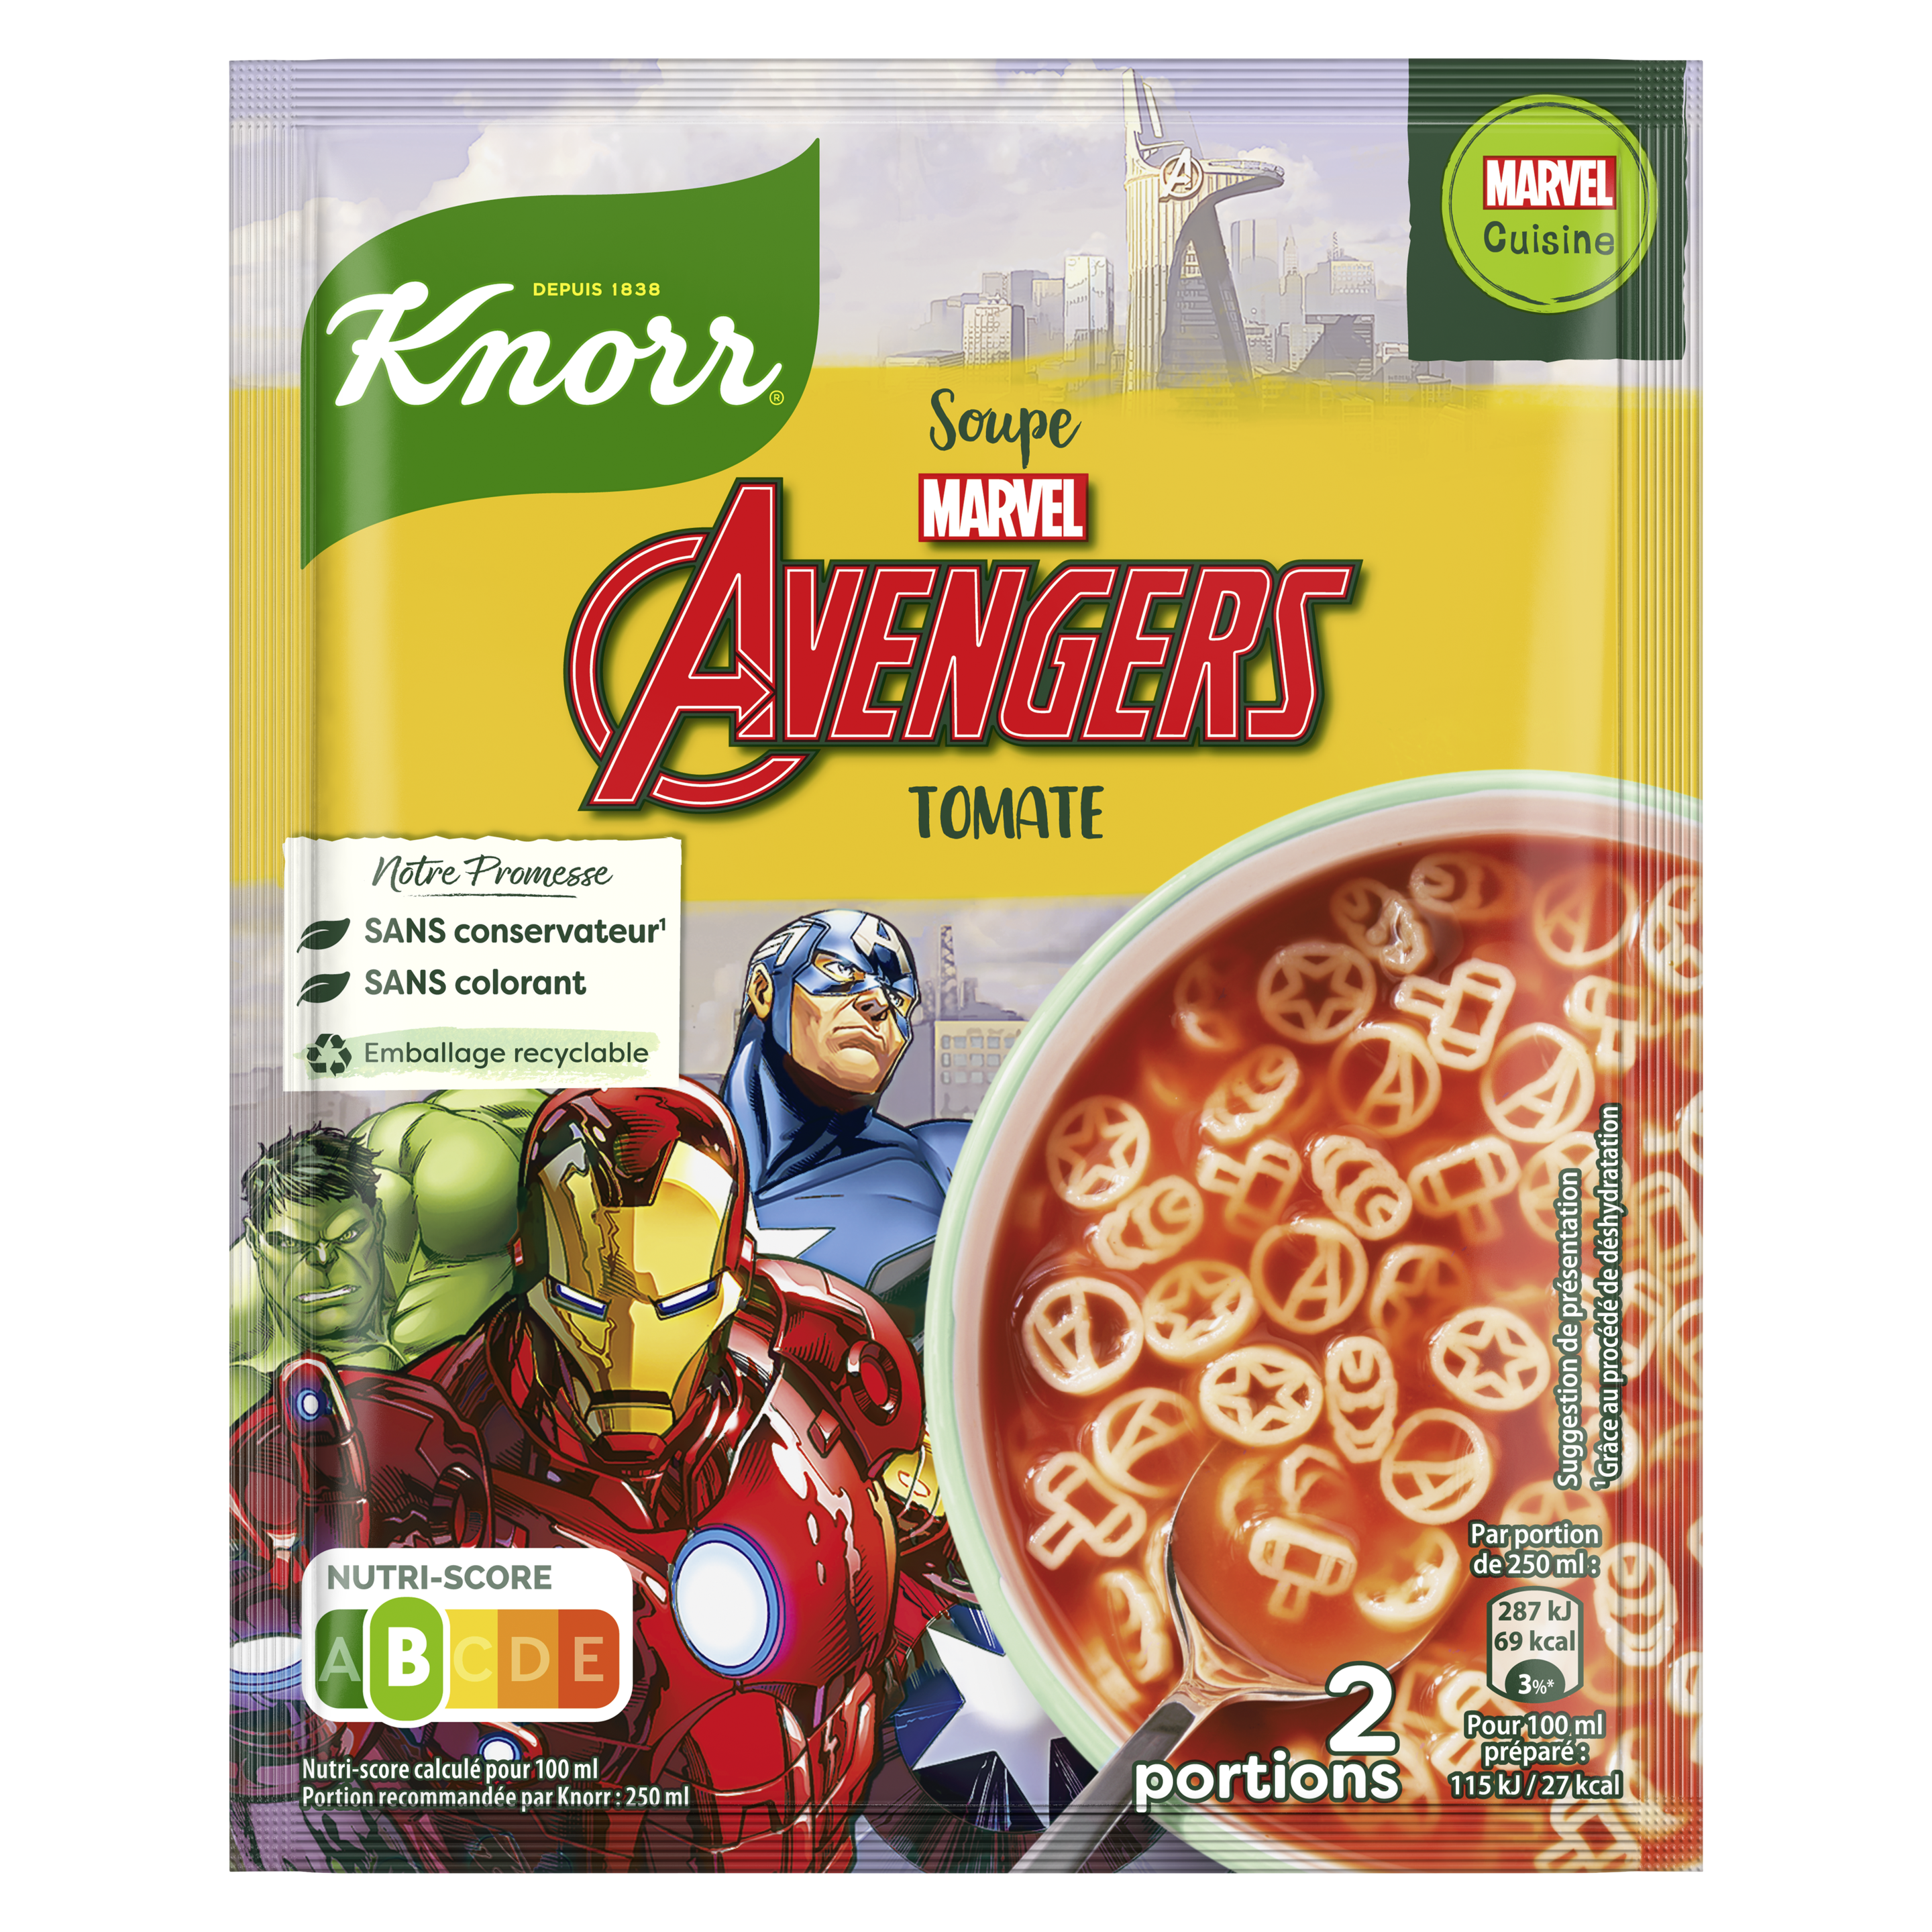 Soupe MARVEL Avengers tomate par Knorr®